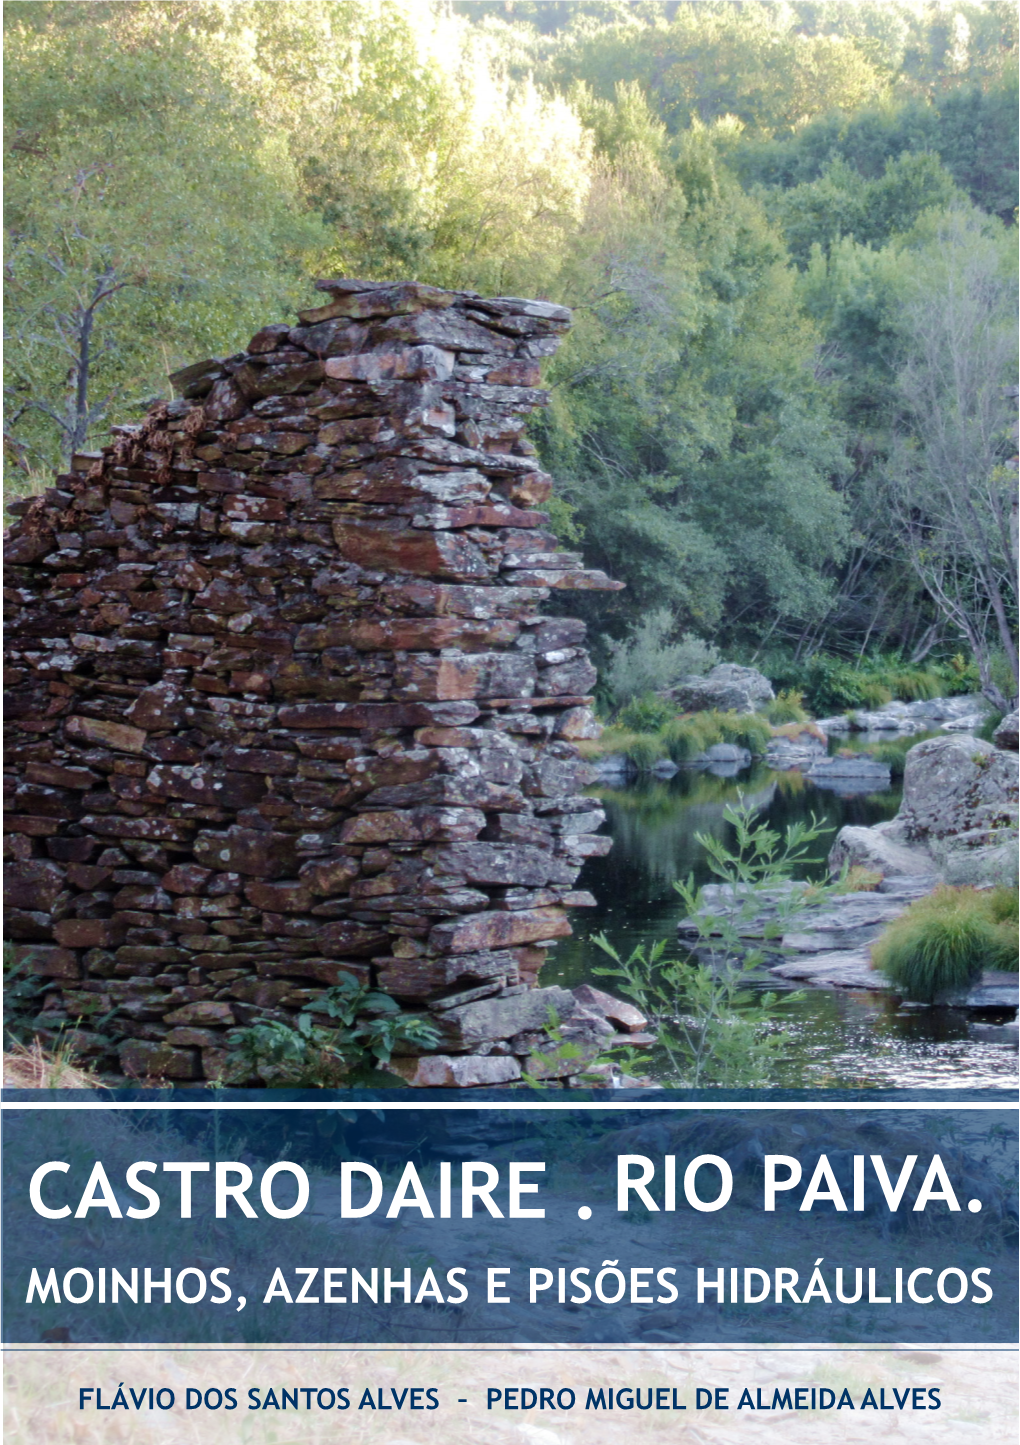 Castro Daire .Rio Paiva